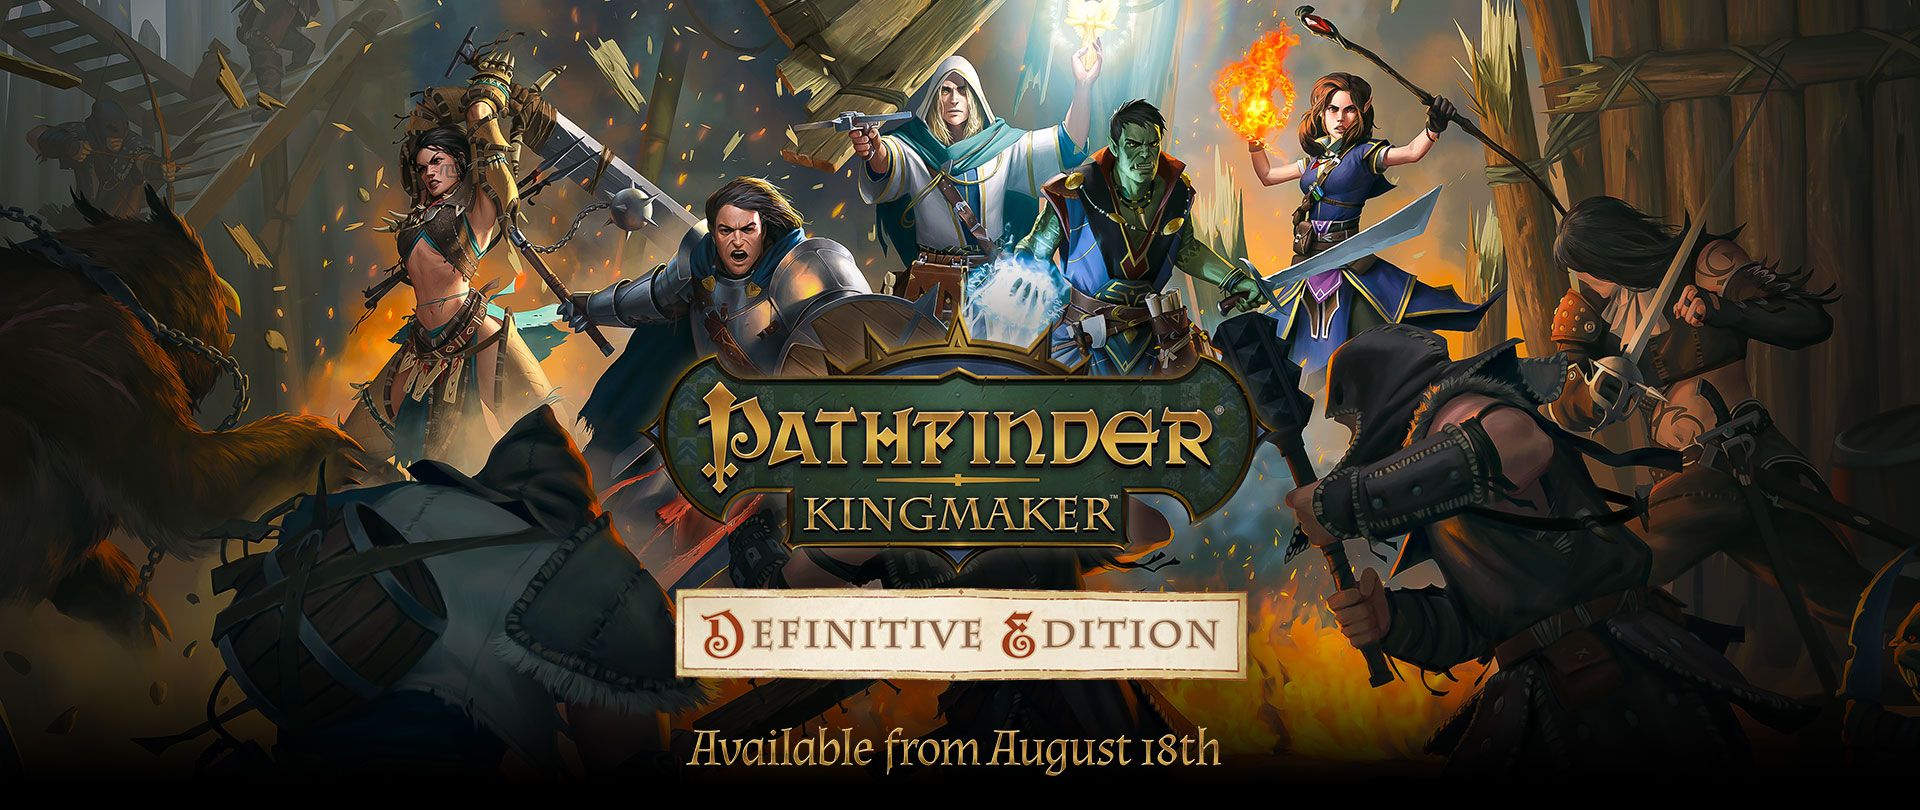 Pathfinder: Kingmaker -- Enhanced Plus Edition download the last version for windows